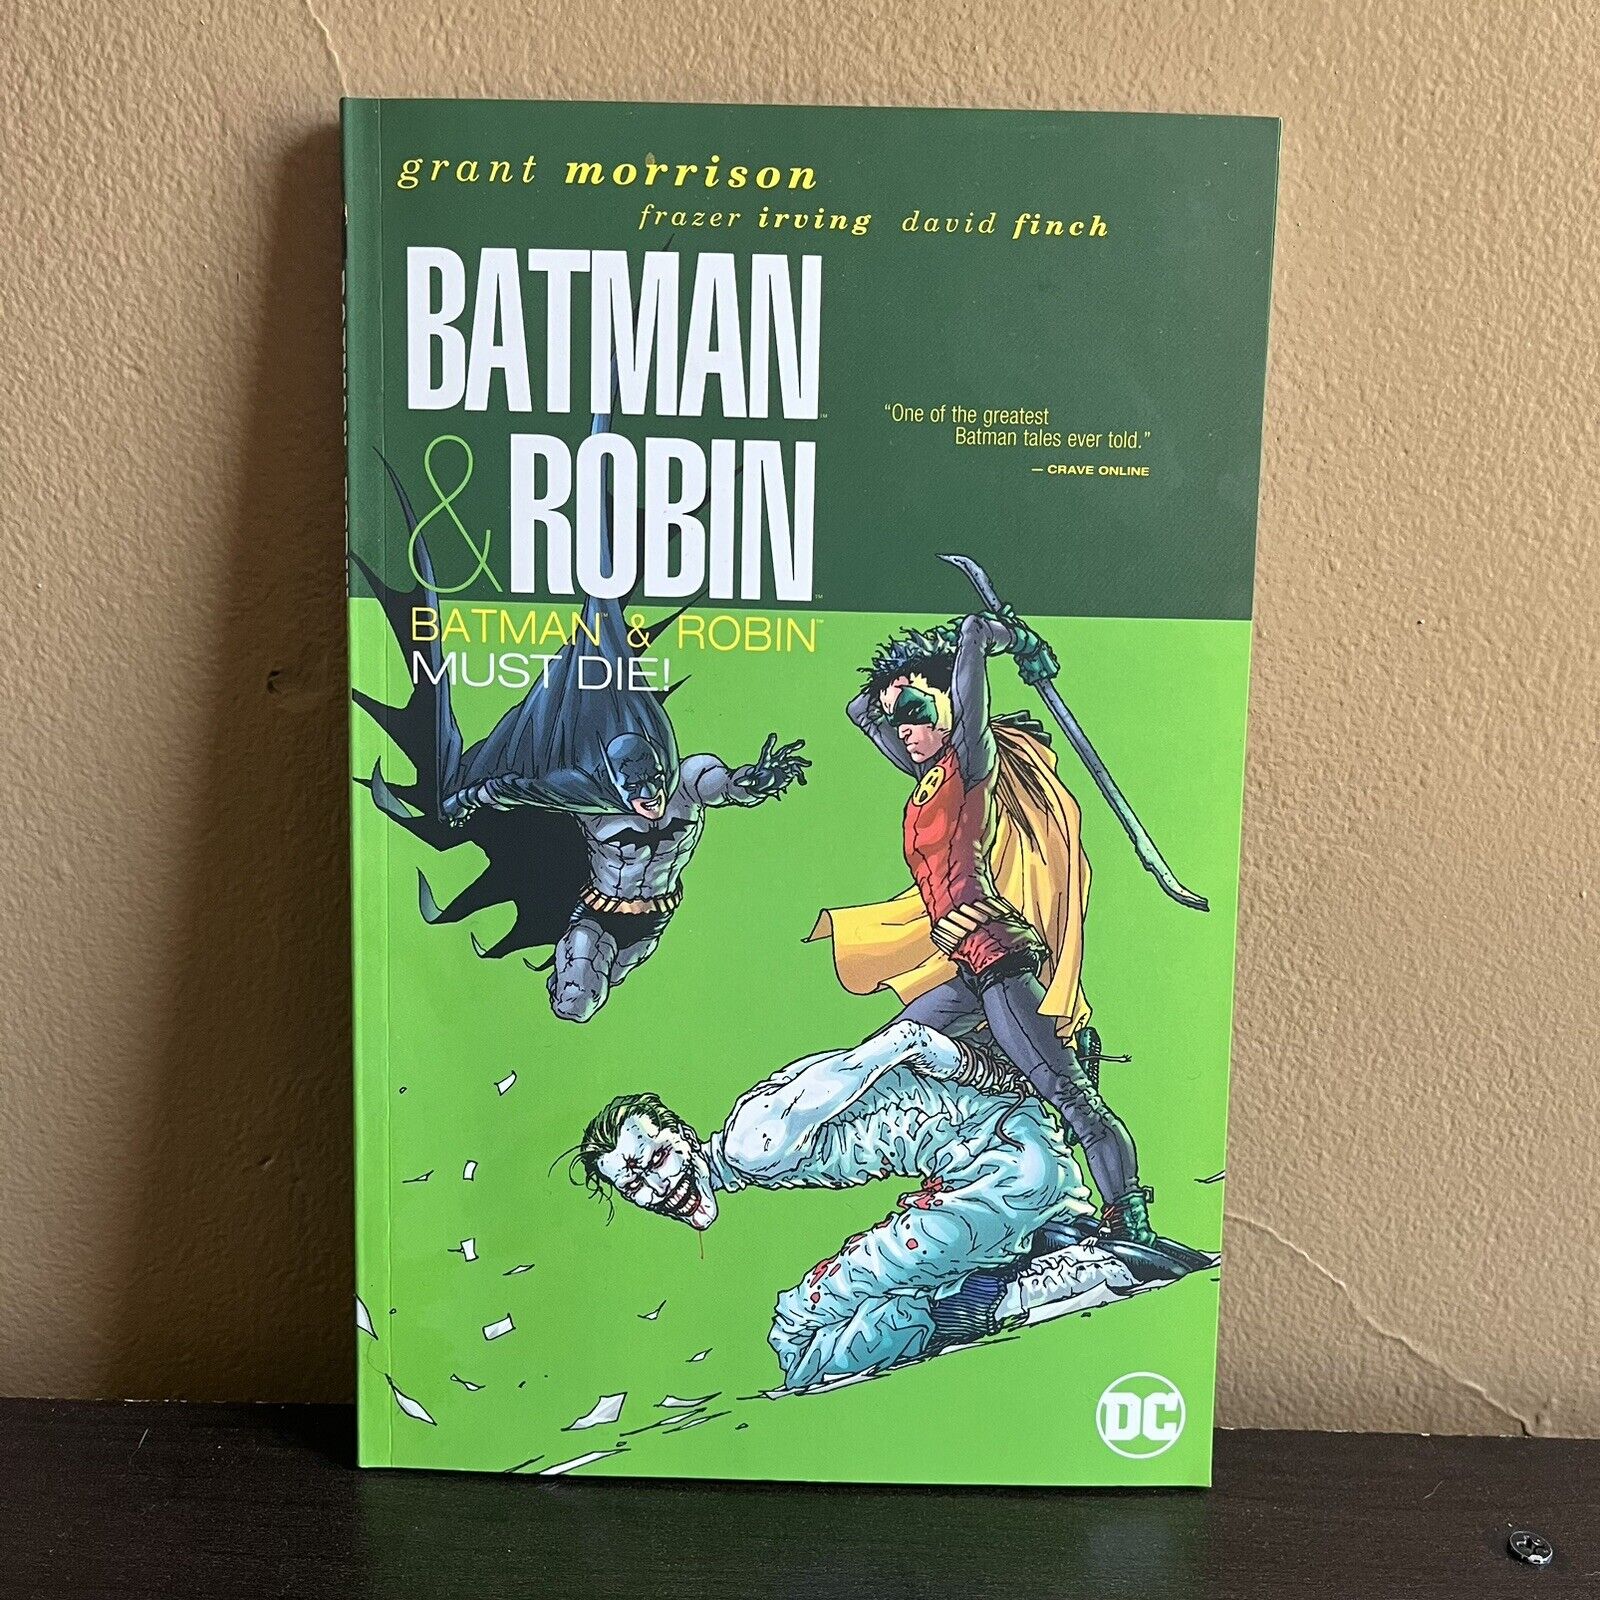 Batman & Robin Vol. 3: Batman & Robin Must Die by Grant Morrison: Used